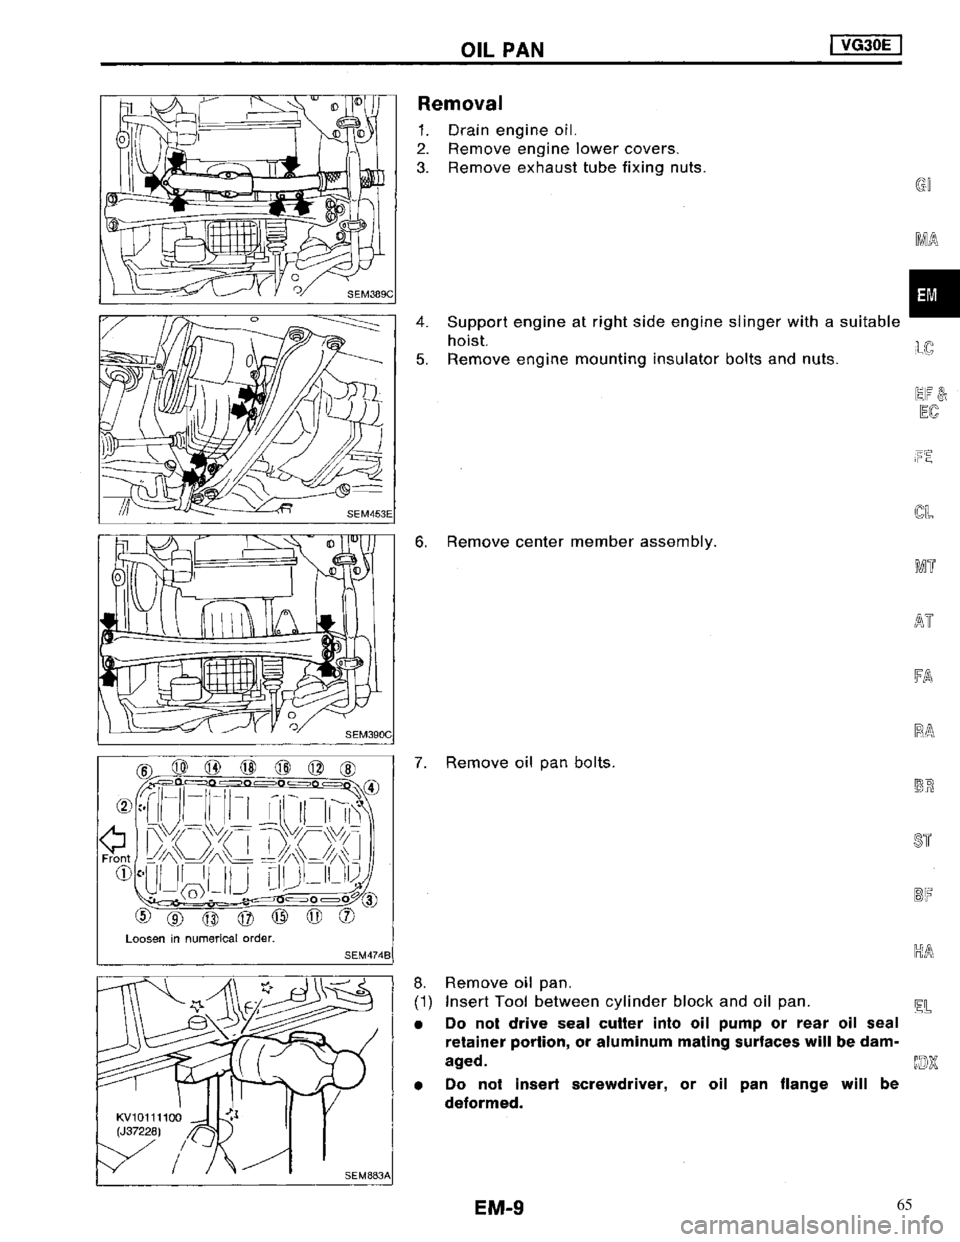 NISSAN MAXIMA 1994 A32 / 4.G Engine Mechanical Workshop Manual 65 